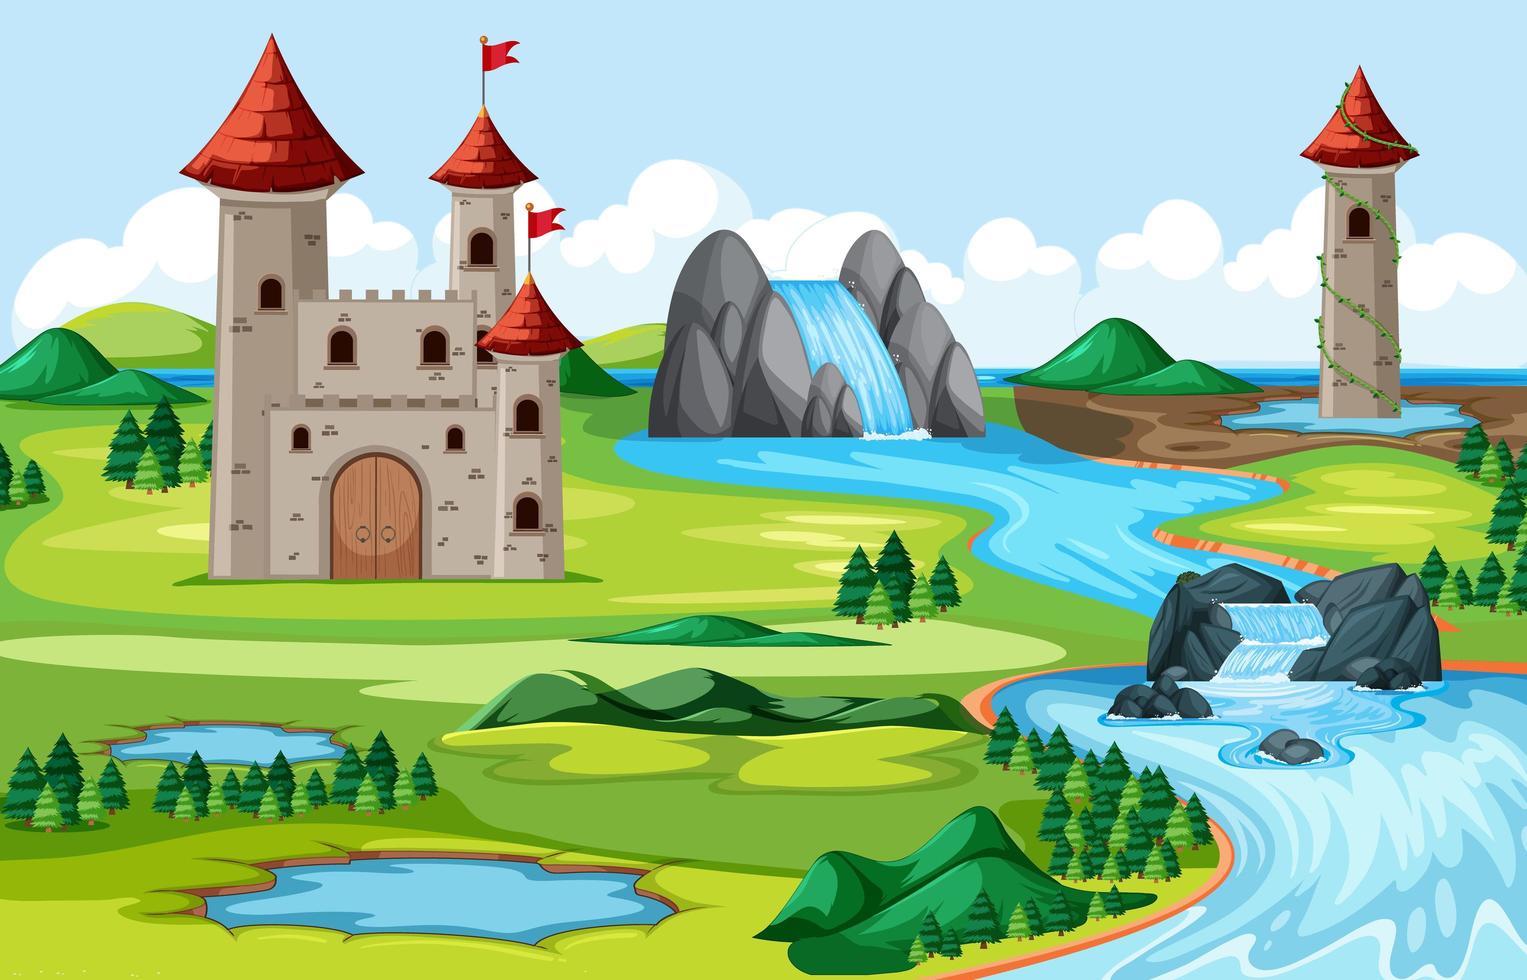 Castles and nature park with river side landscape scene vector